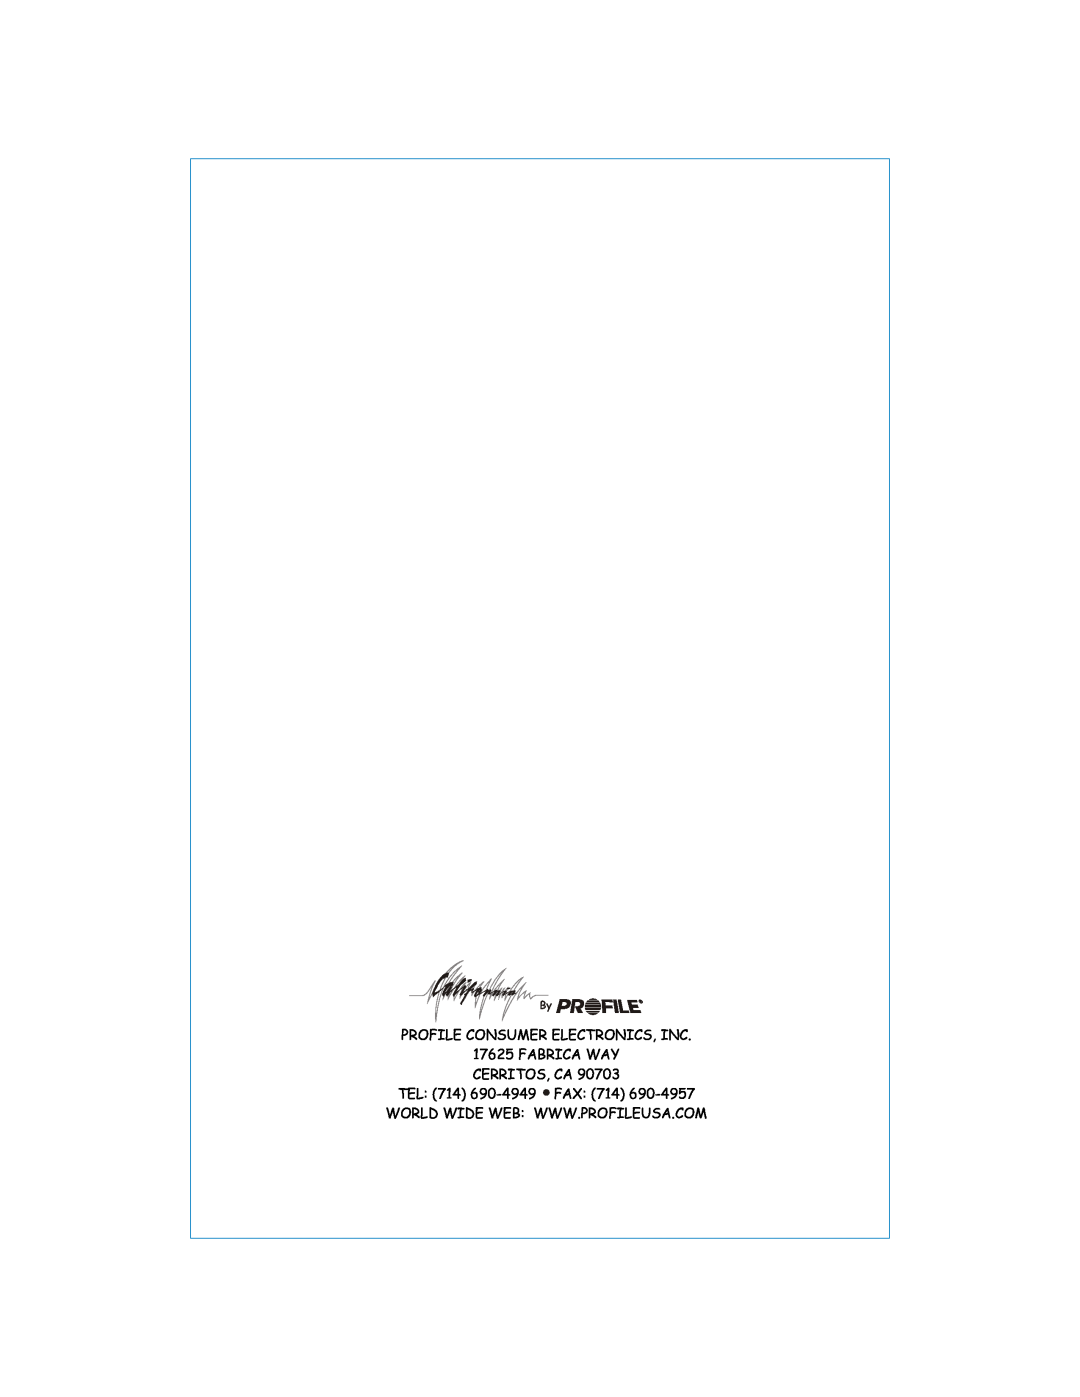 Profile 400SX installation instructions Fax, Profile Consumer Electronics, Inc, Fabrica Way, Cerritos, Ca, Tel 